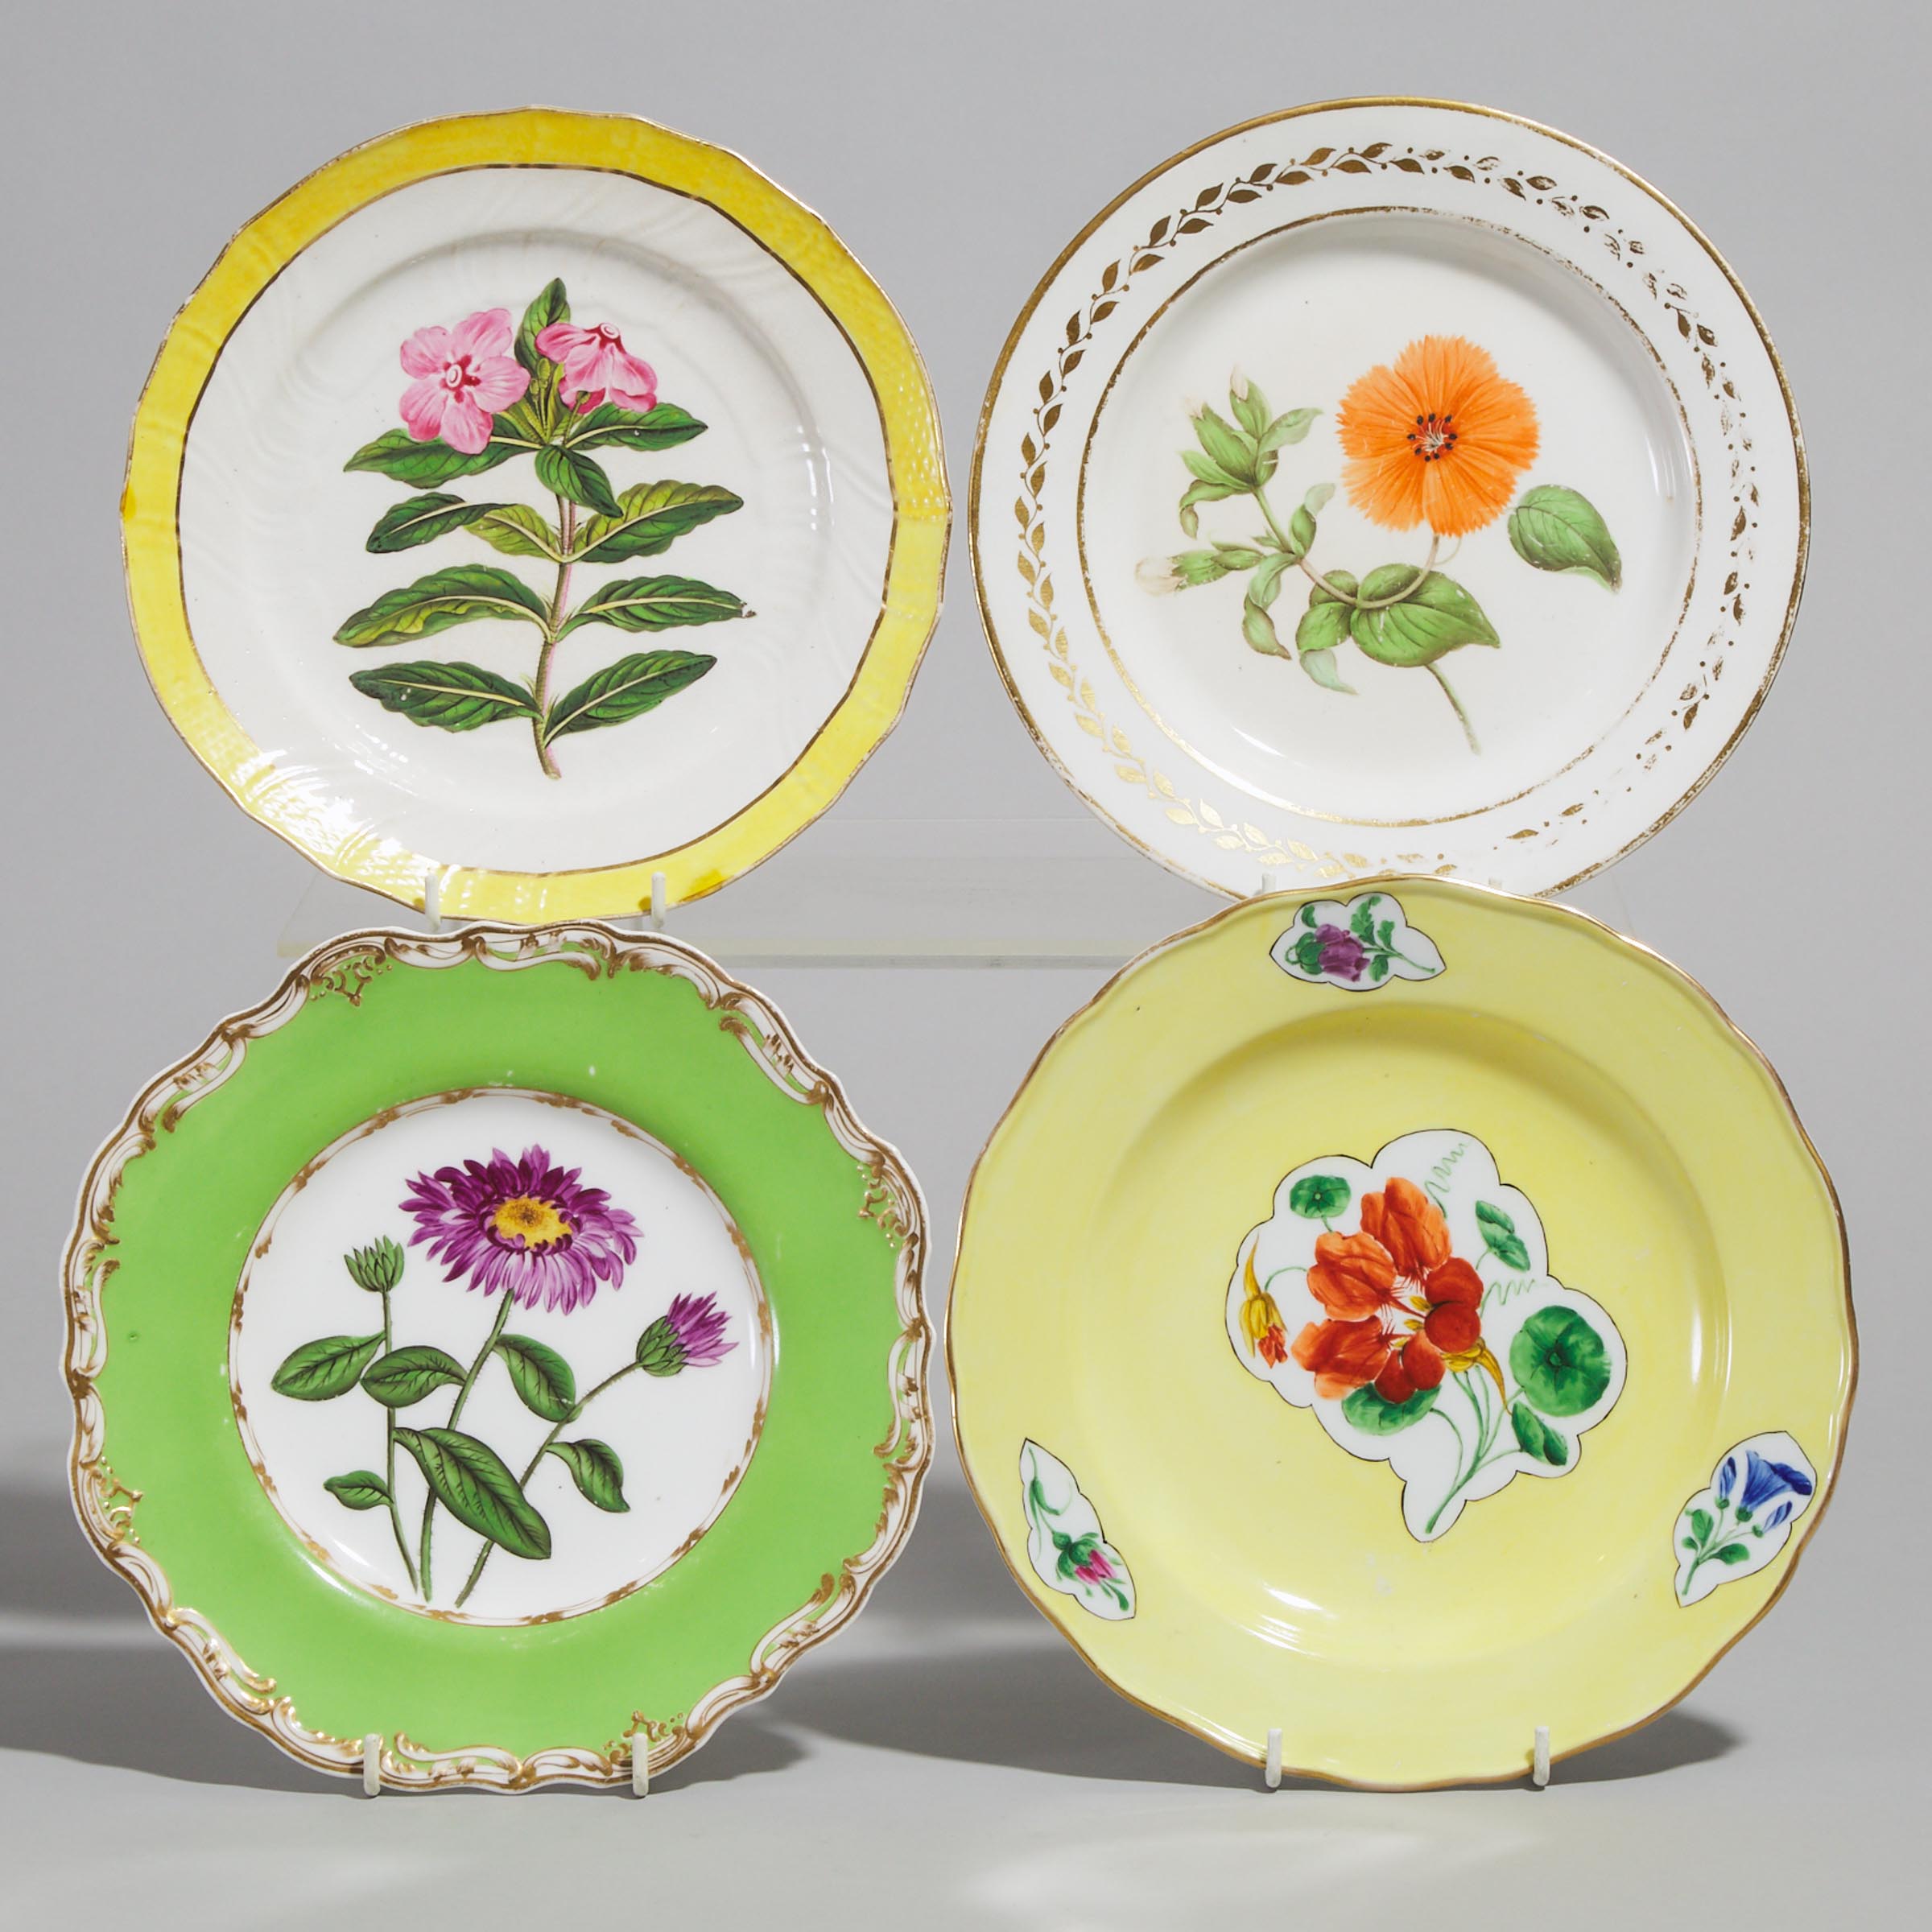 Four English and German Porcelain Botanical Plates, 19th century